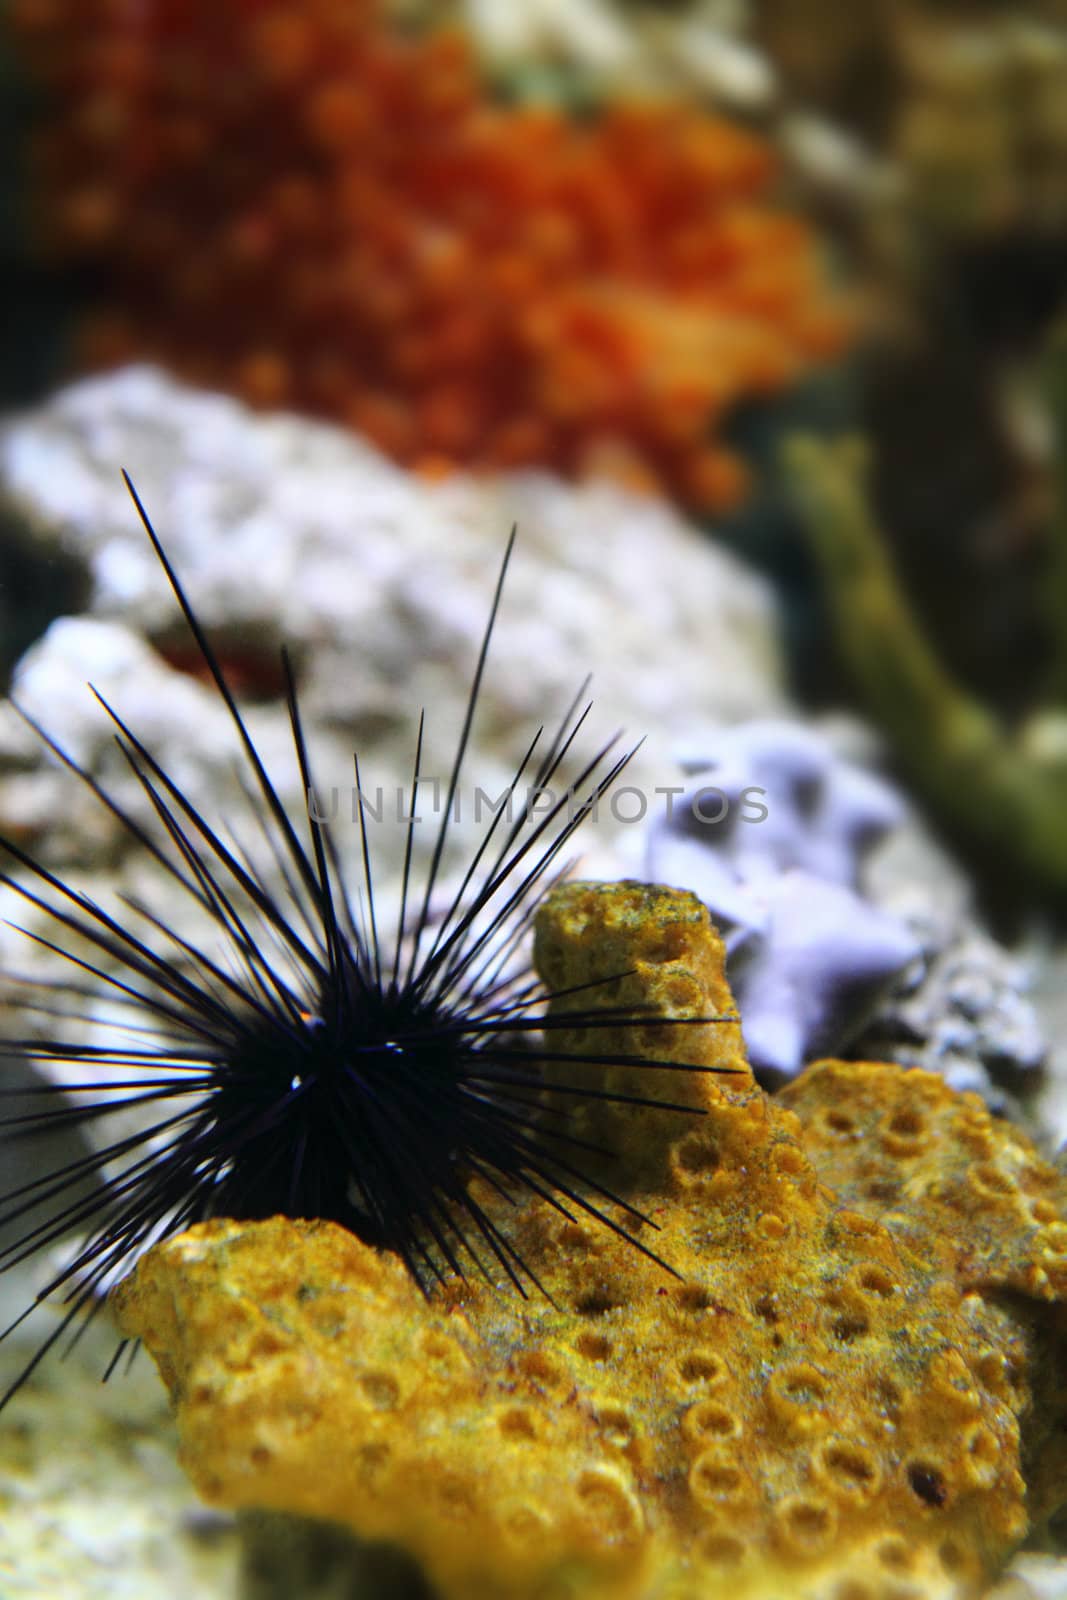 sea urchin in the natural sea background